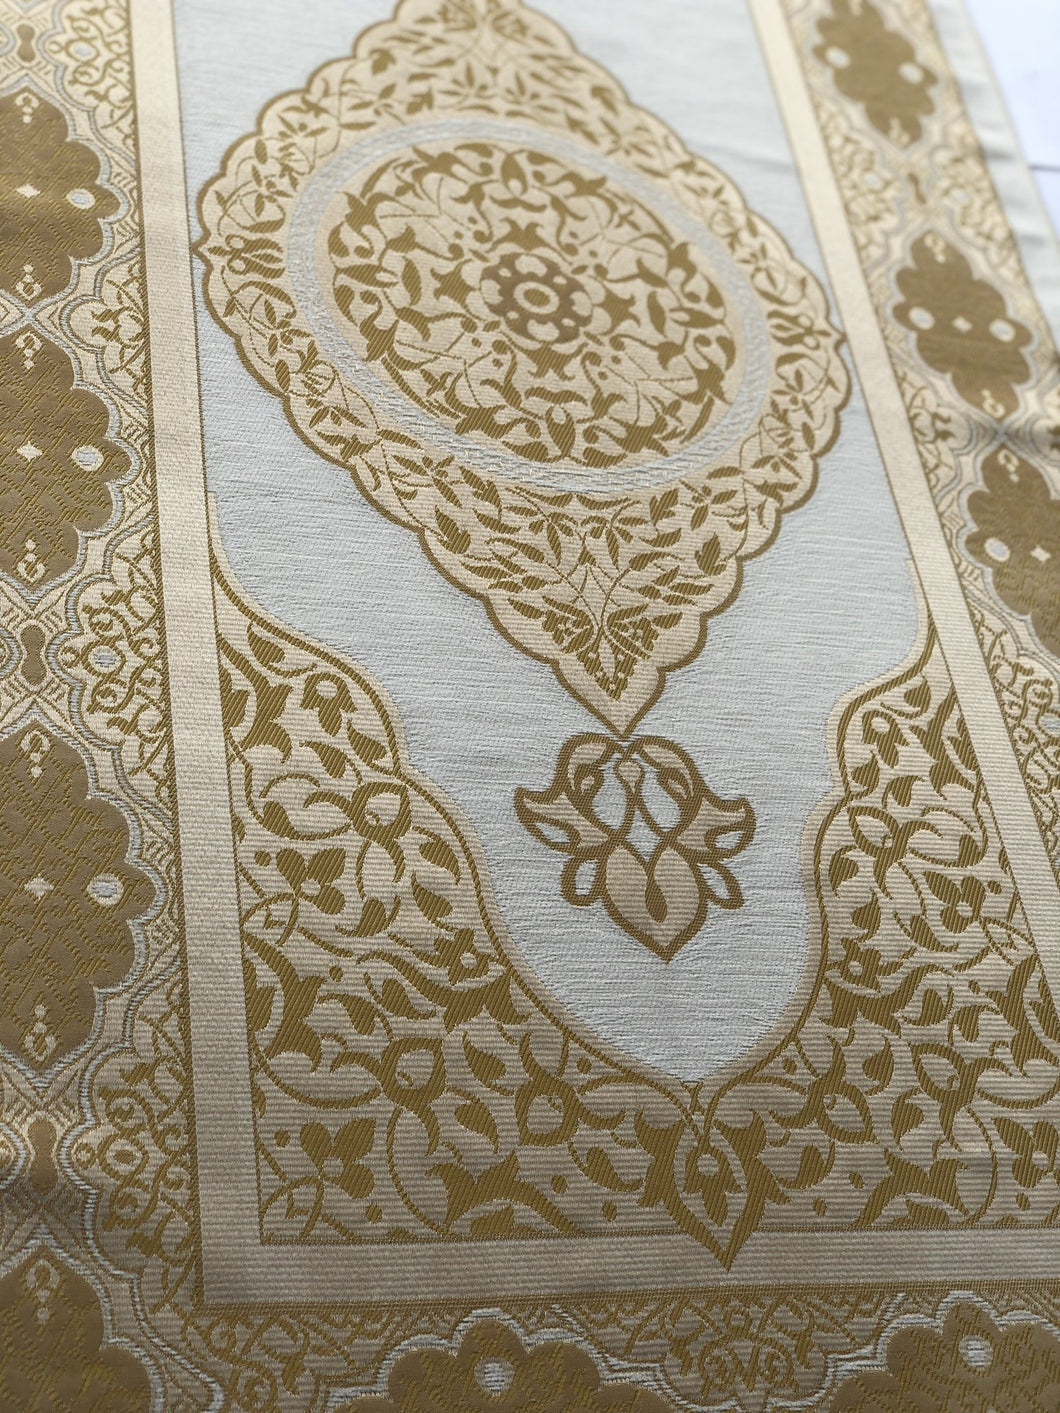 White with gold detail prayer Mat